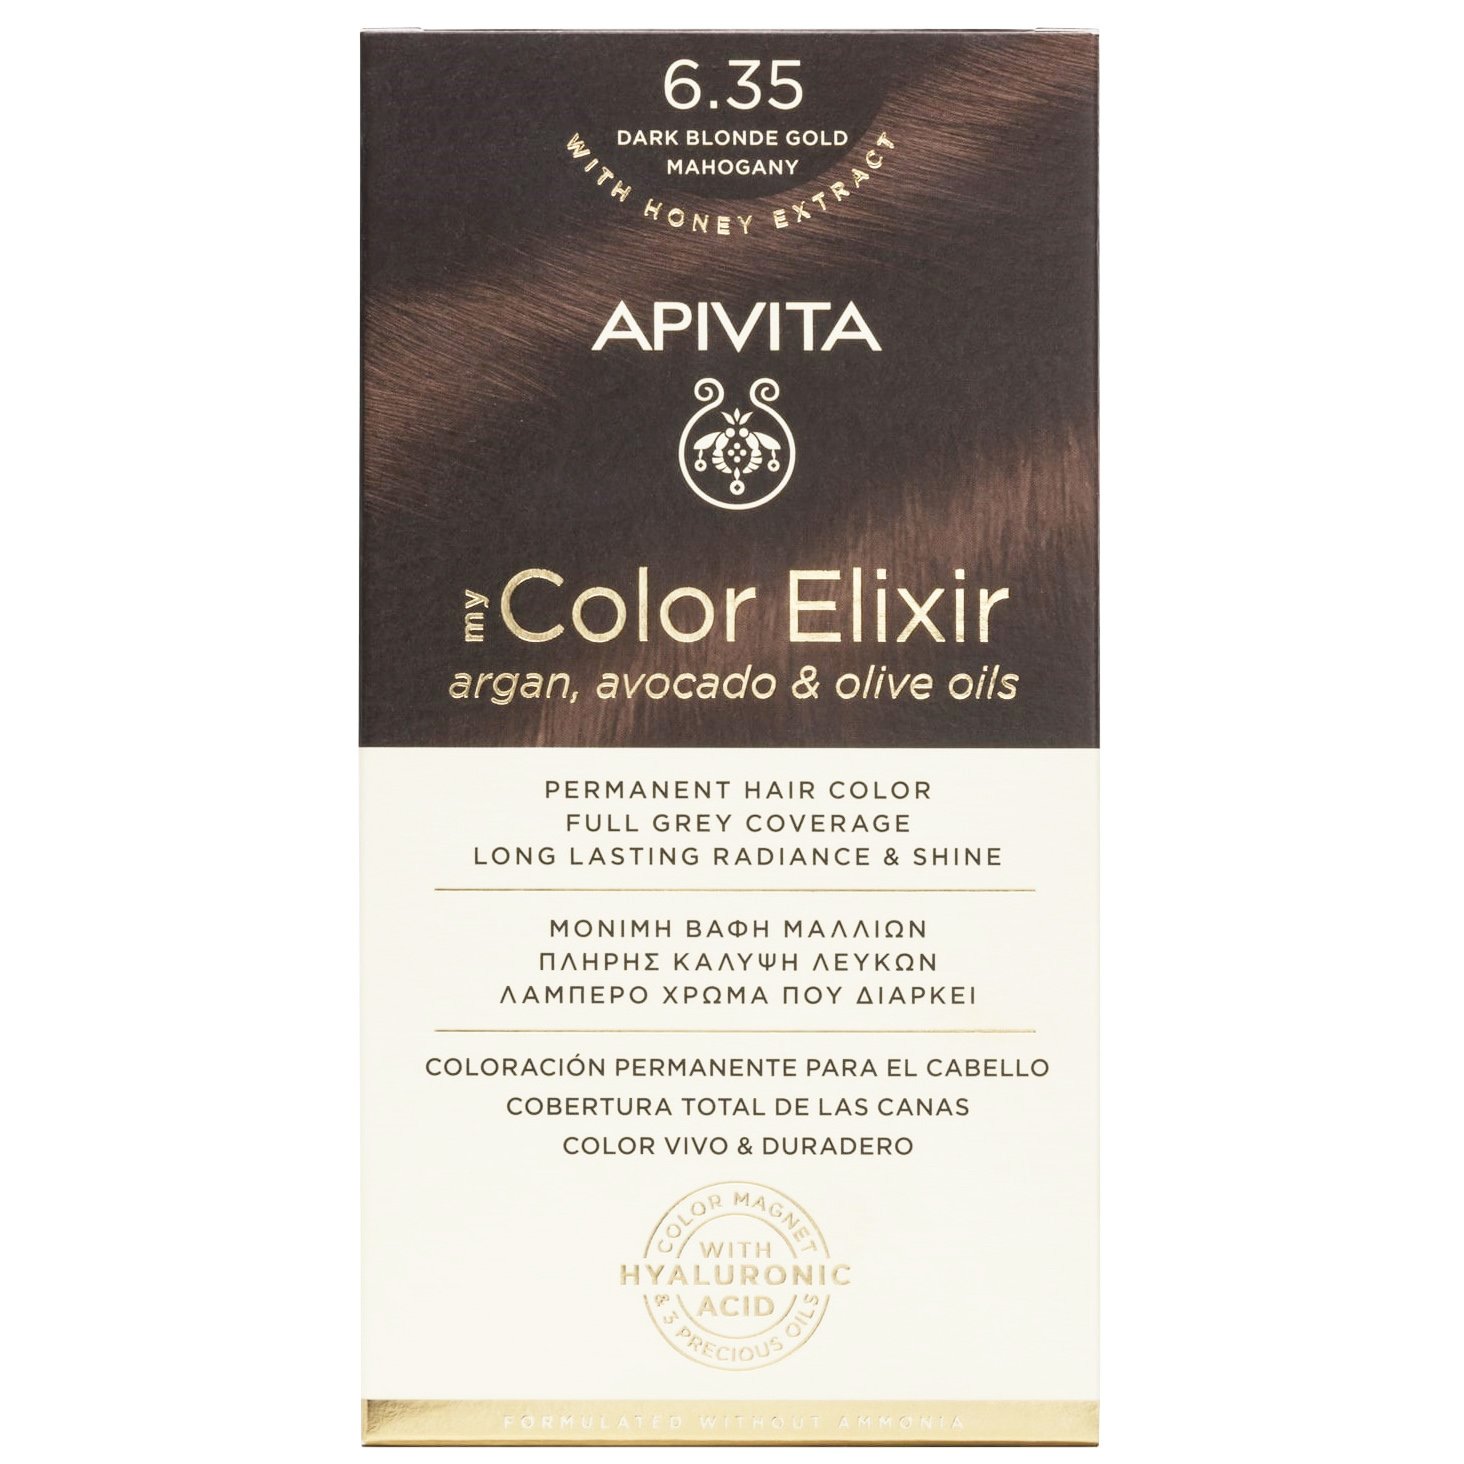 Apivita Promo My Color Elixir Permanent Hair Color Μόνιμη Βαφή Μαλλιών για Λαμπερό Χρώμα που Διαρκεί – 6.35 Ξανθό Σκούρο Μελί Μαονί